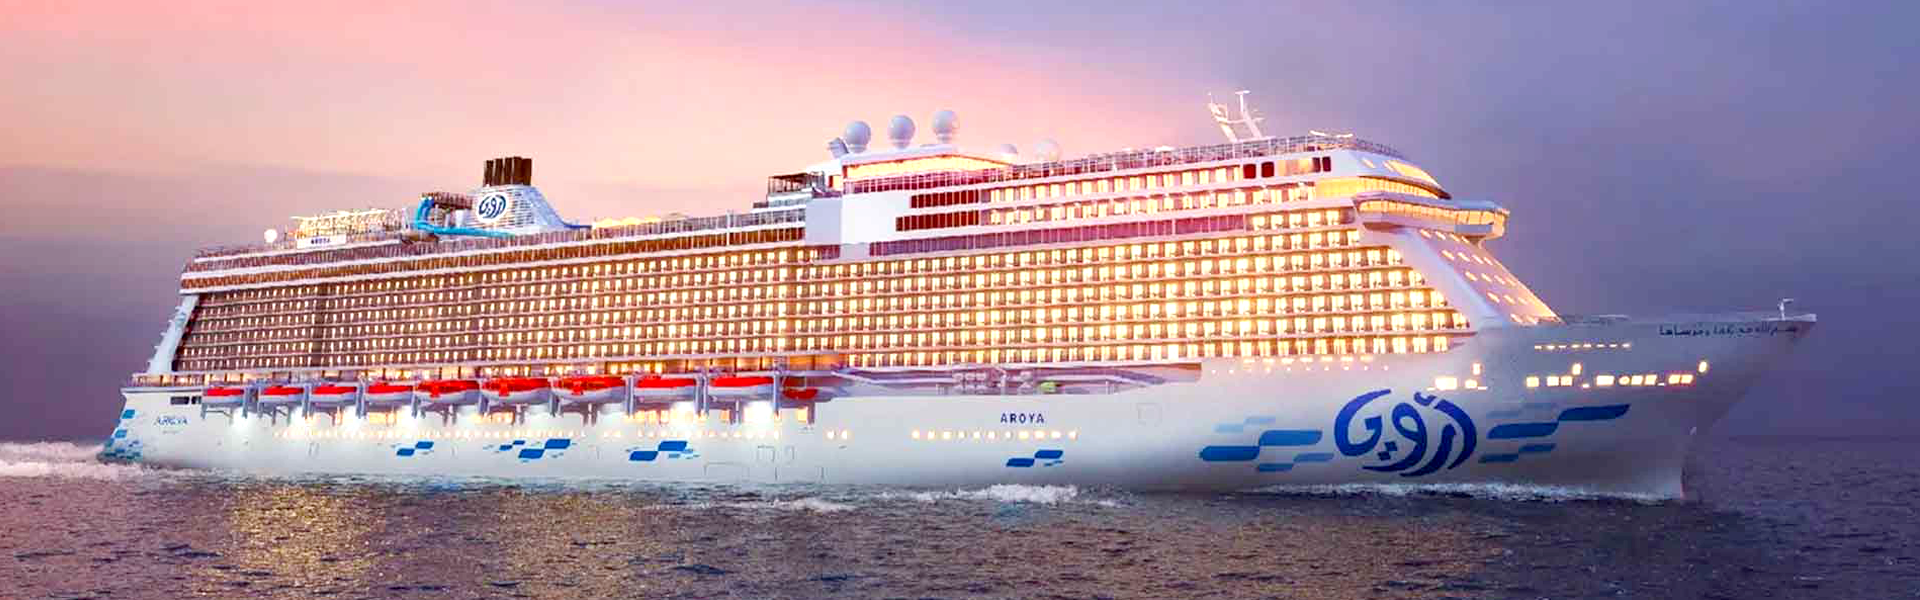 Aroya Cruises special Deal